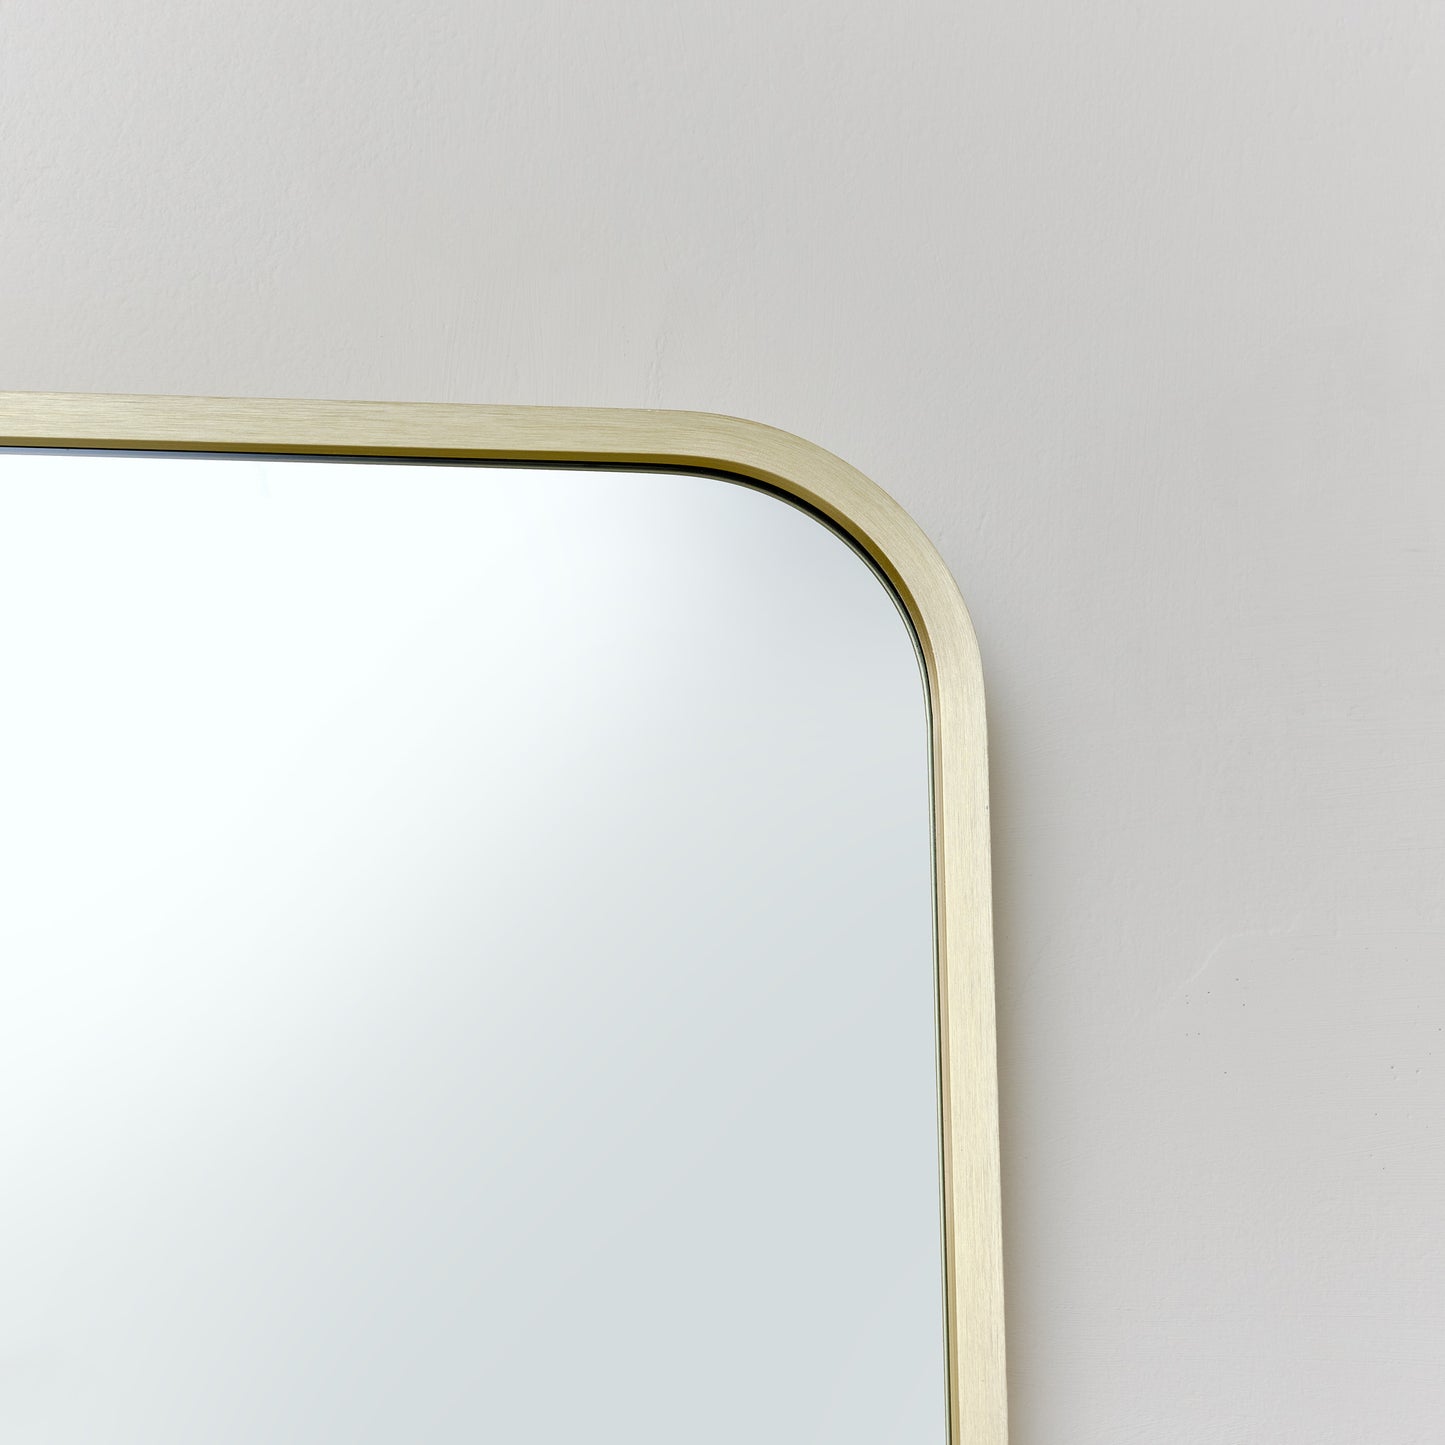 Gold Curved Framed Wall Mirror 50cm x 40cm